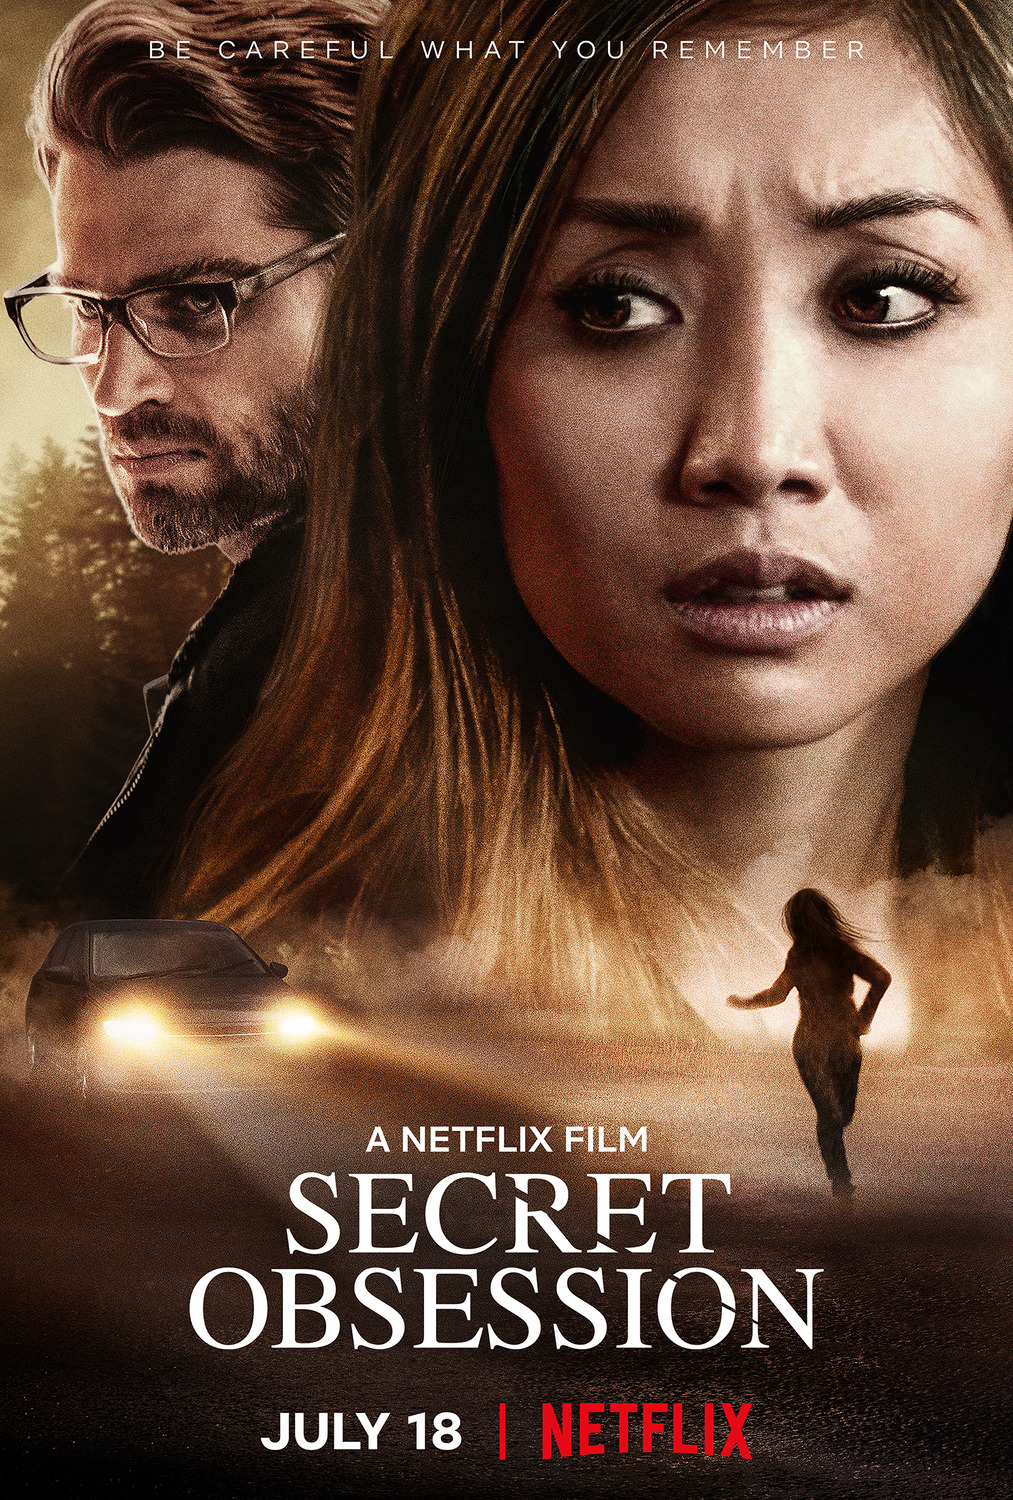 Secret Obsession (2019) แอบ จ้อง ฆ่า Brenda Song